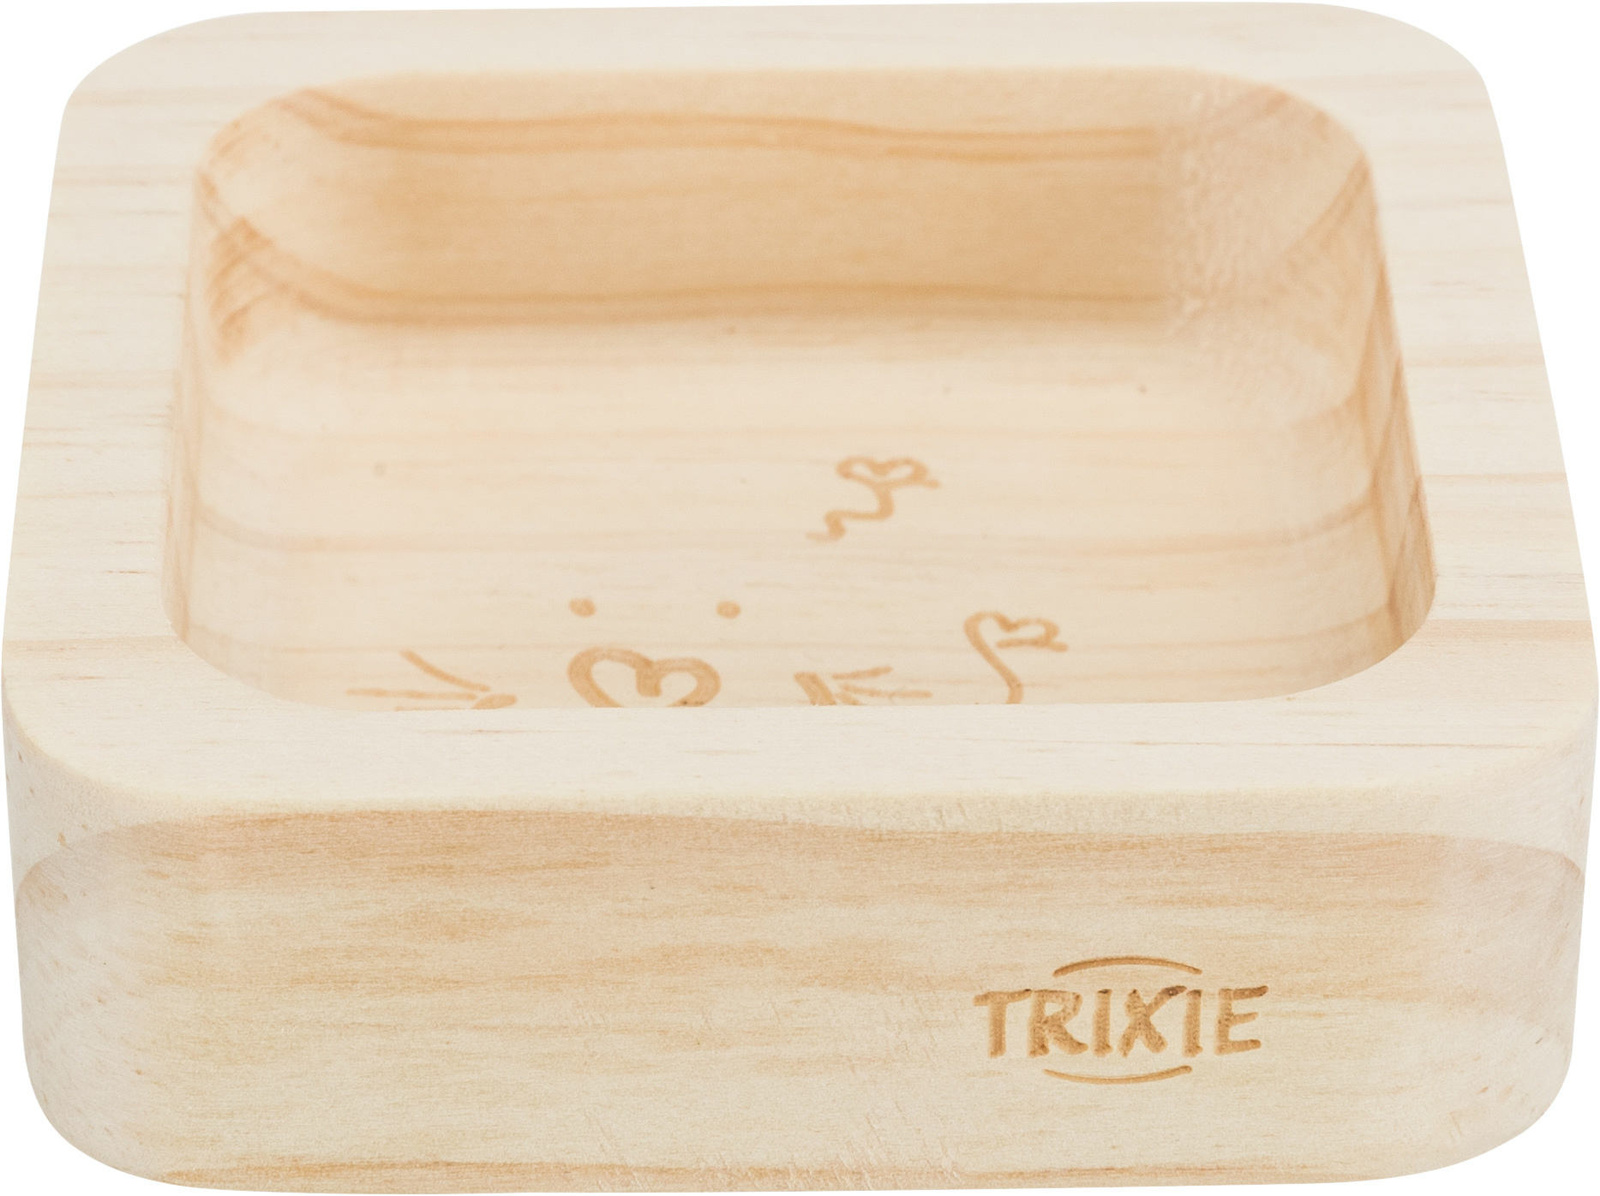 Trixie Trixie миска, дерево (8 см) миска для грызунов trixie дерево 8х8см 60мл